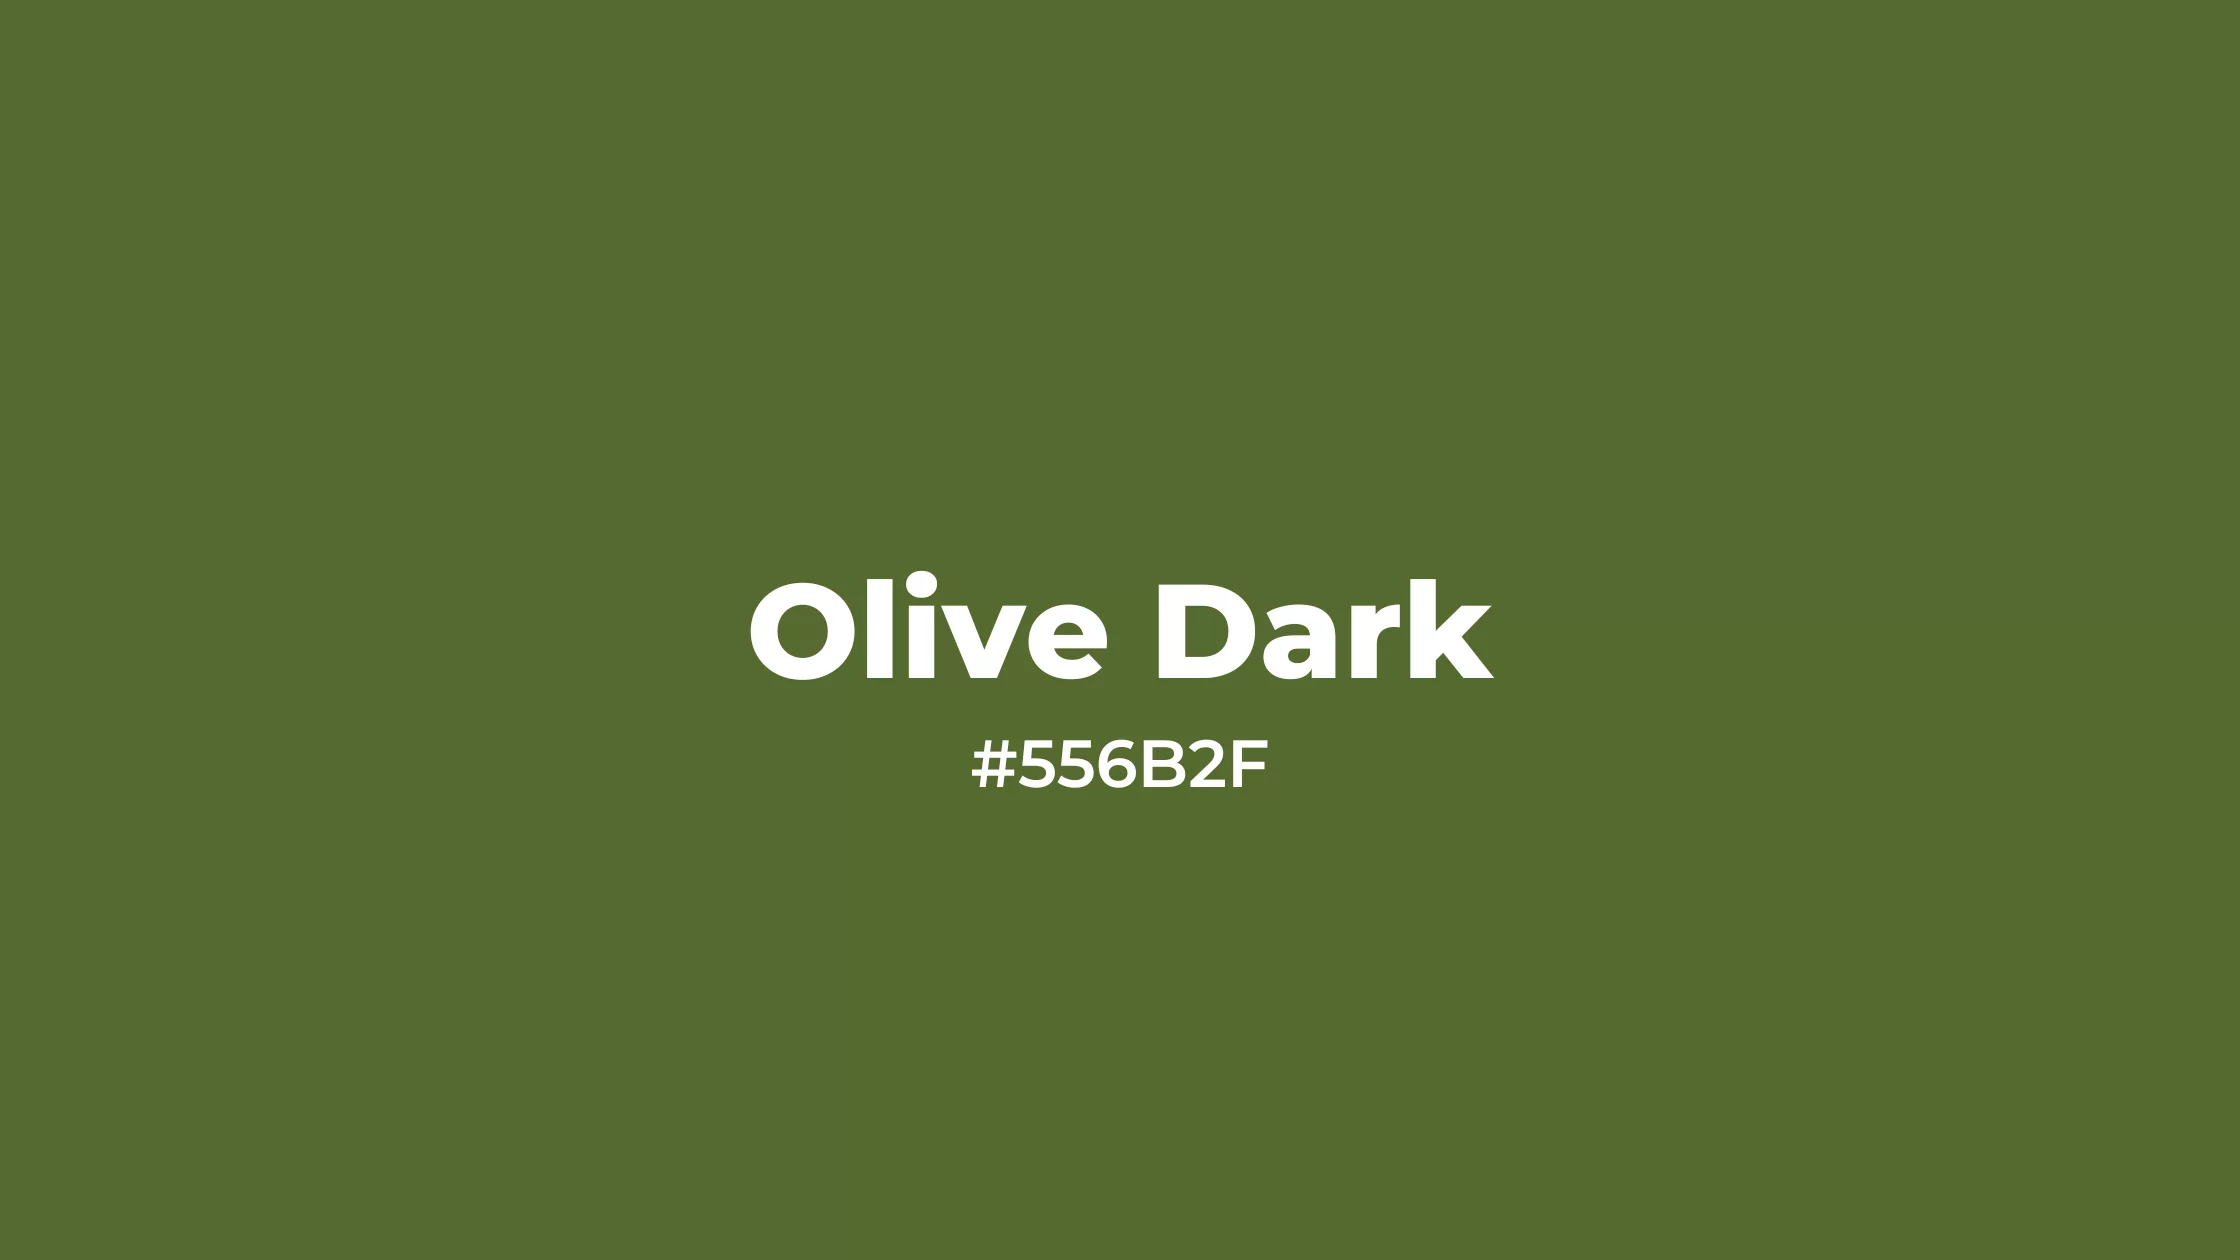 Olive dark